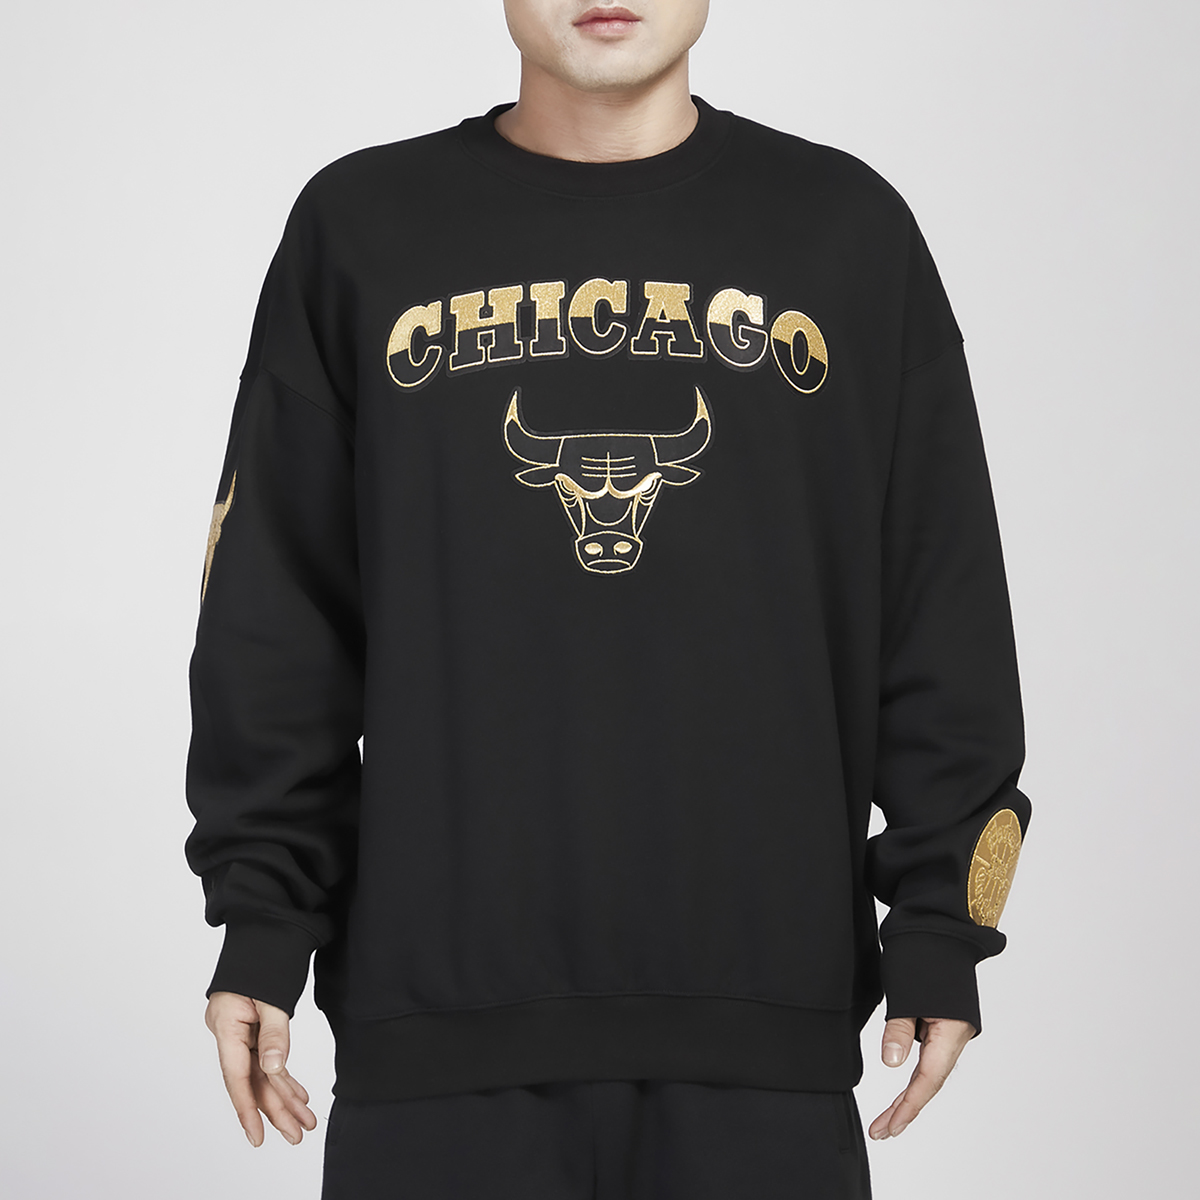 Chicago-Bulls-Pro-Standard-Black-Gold-Sweatshirt-1